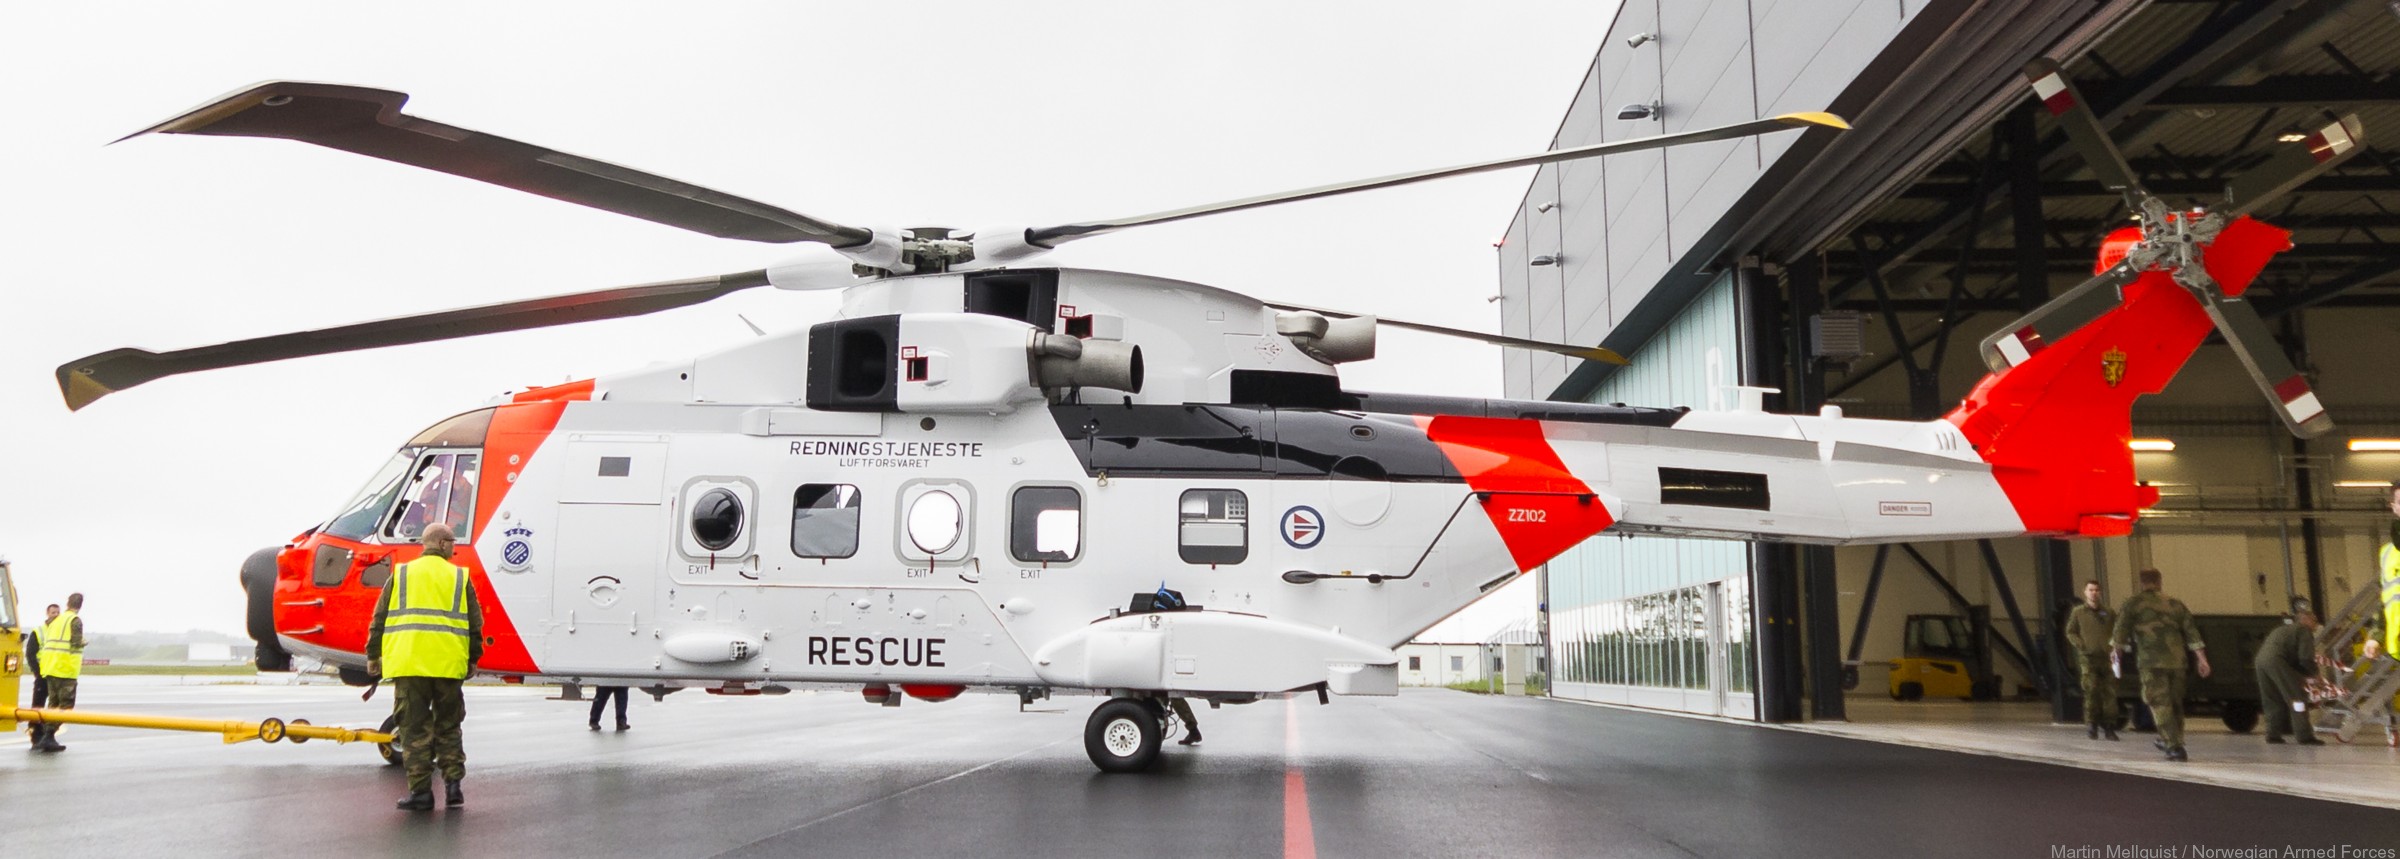 agusta westland aw101 rescue helicopter royal norwegian air force luftforsvaret sar queen 0265 04